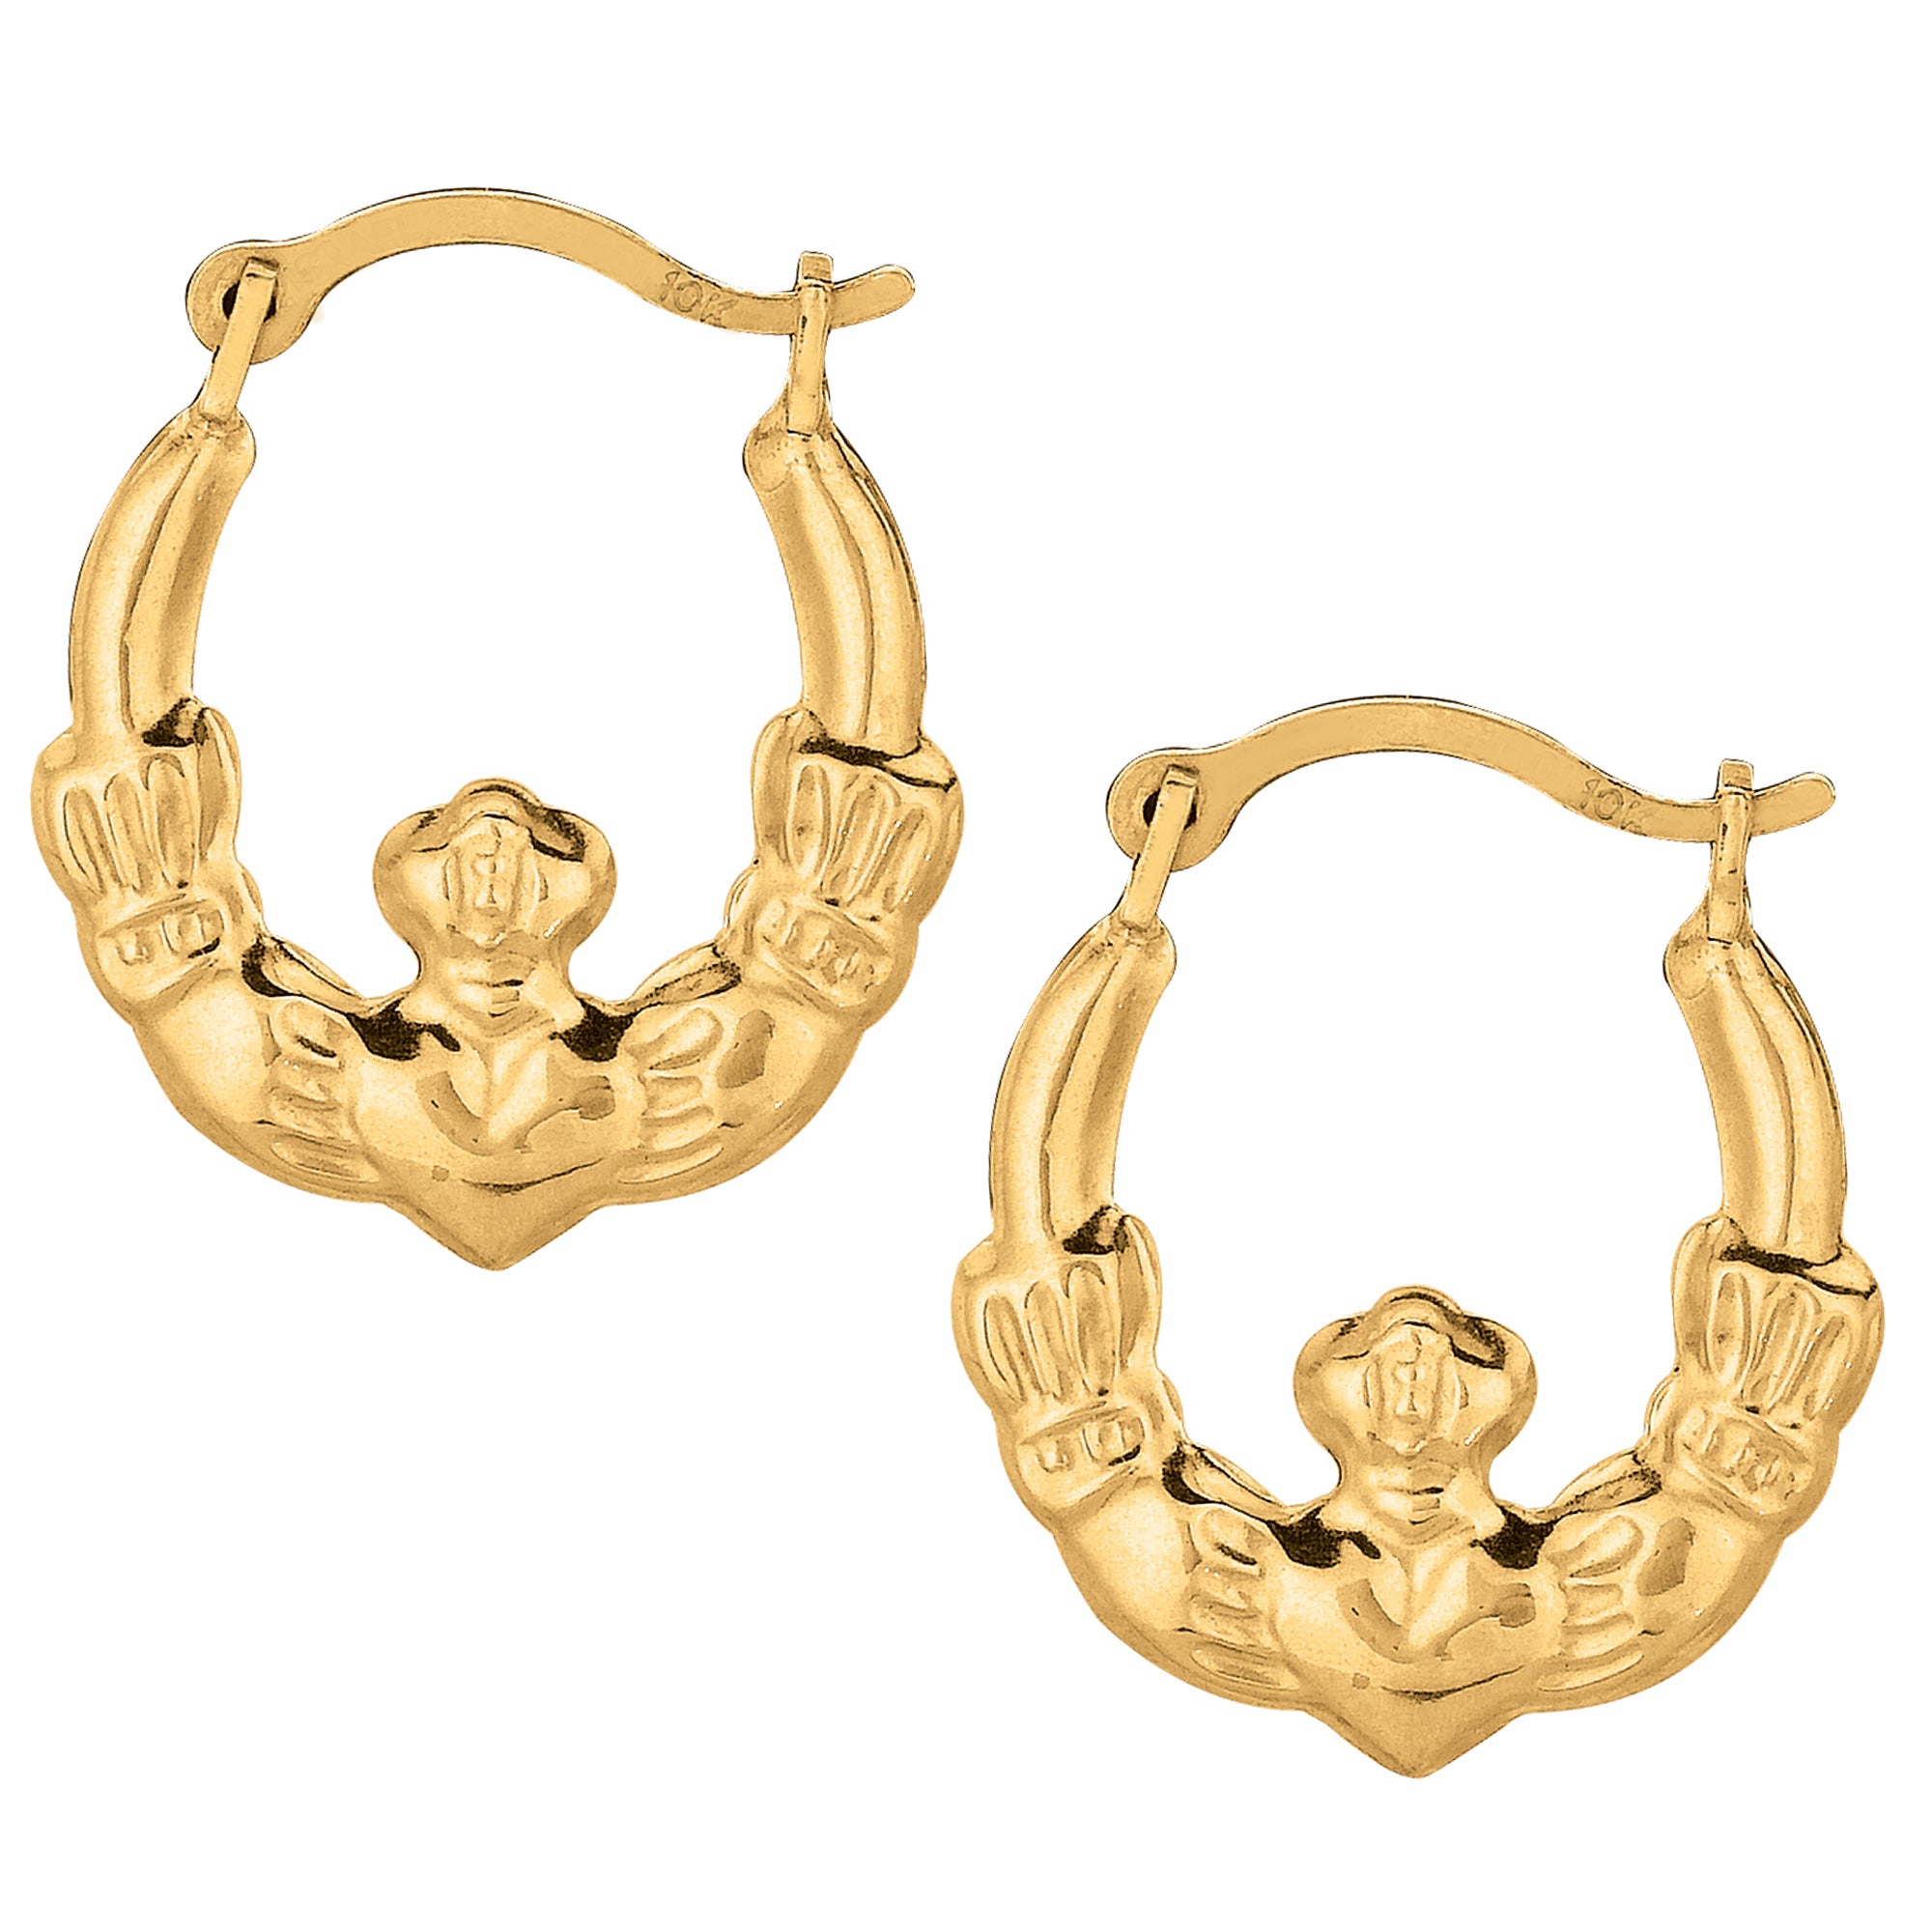 10k Yellow Gold Shiny Claddagh Design Hoop Earrings, Diameter 15mm